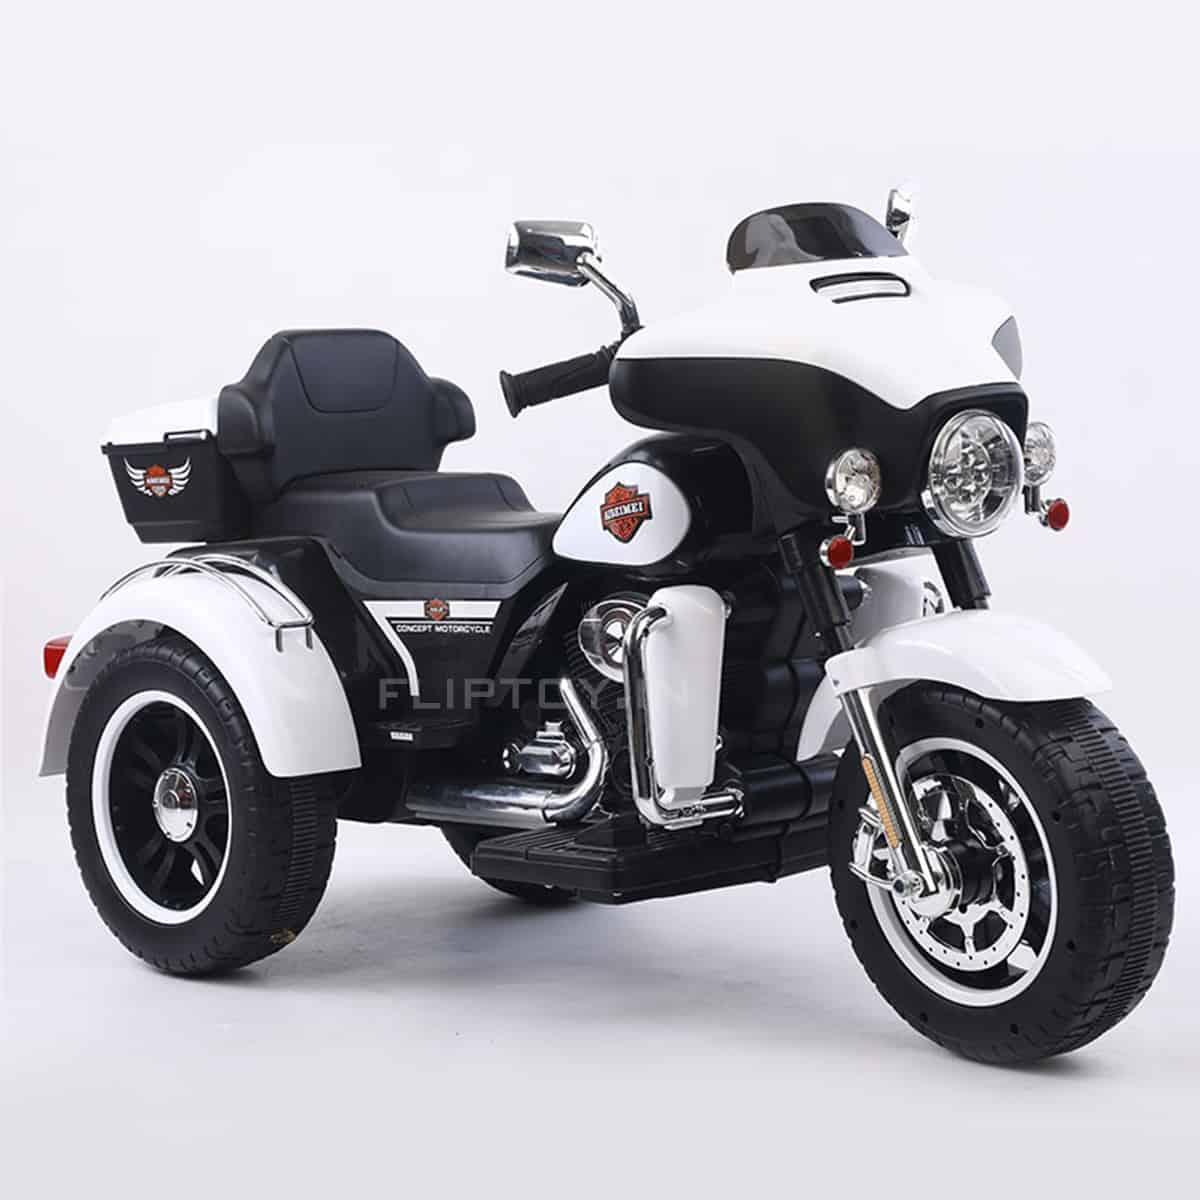 ABM-5288 Children's electric motorcycle Battery Operated Bike Harley Davidson (Non metallic)